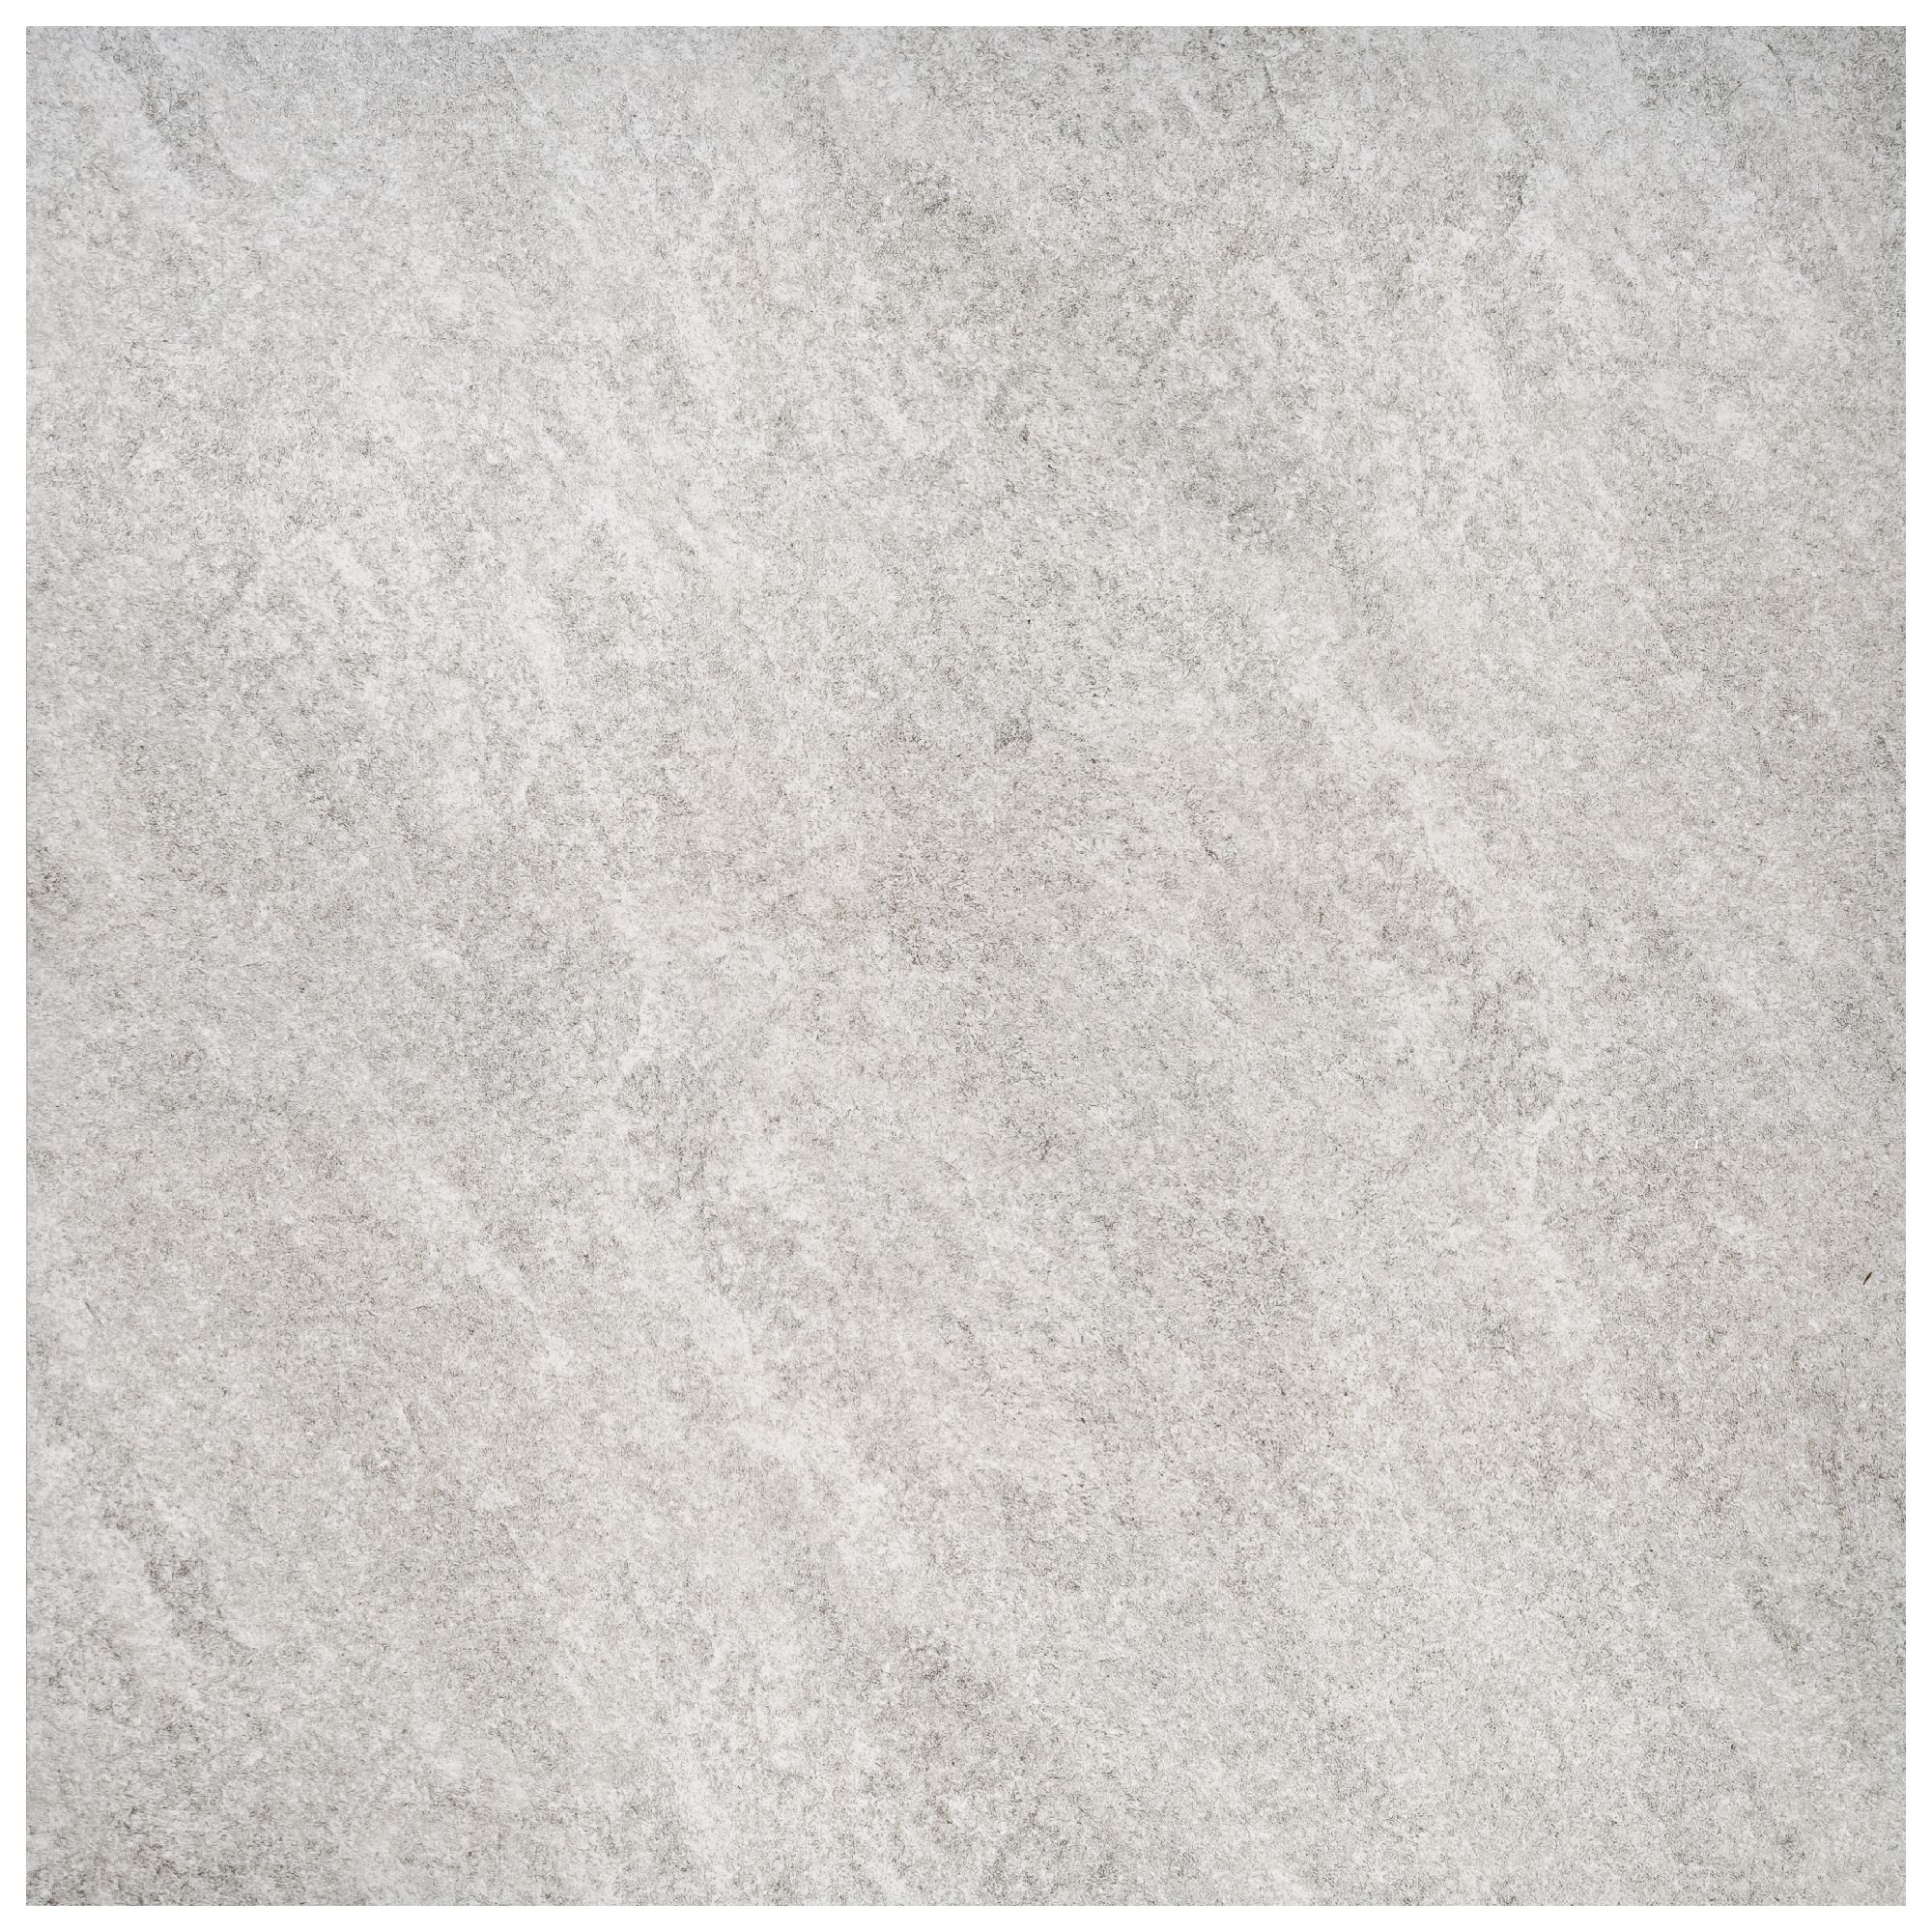 Cosmic Light grey Matt Stone effect Porcelain Outdoor Floor Tile, Pack of 2, (L)600mm (W)600mm